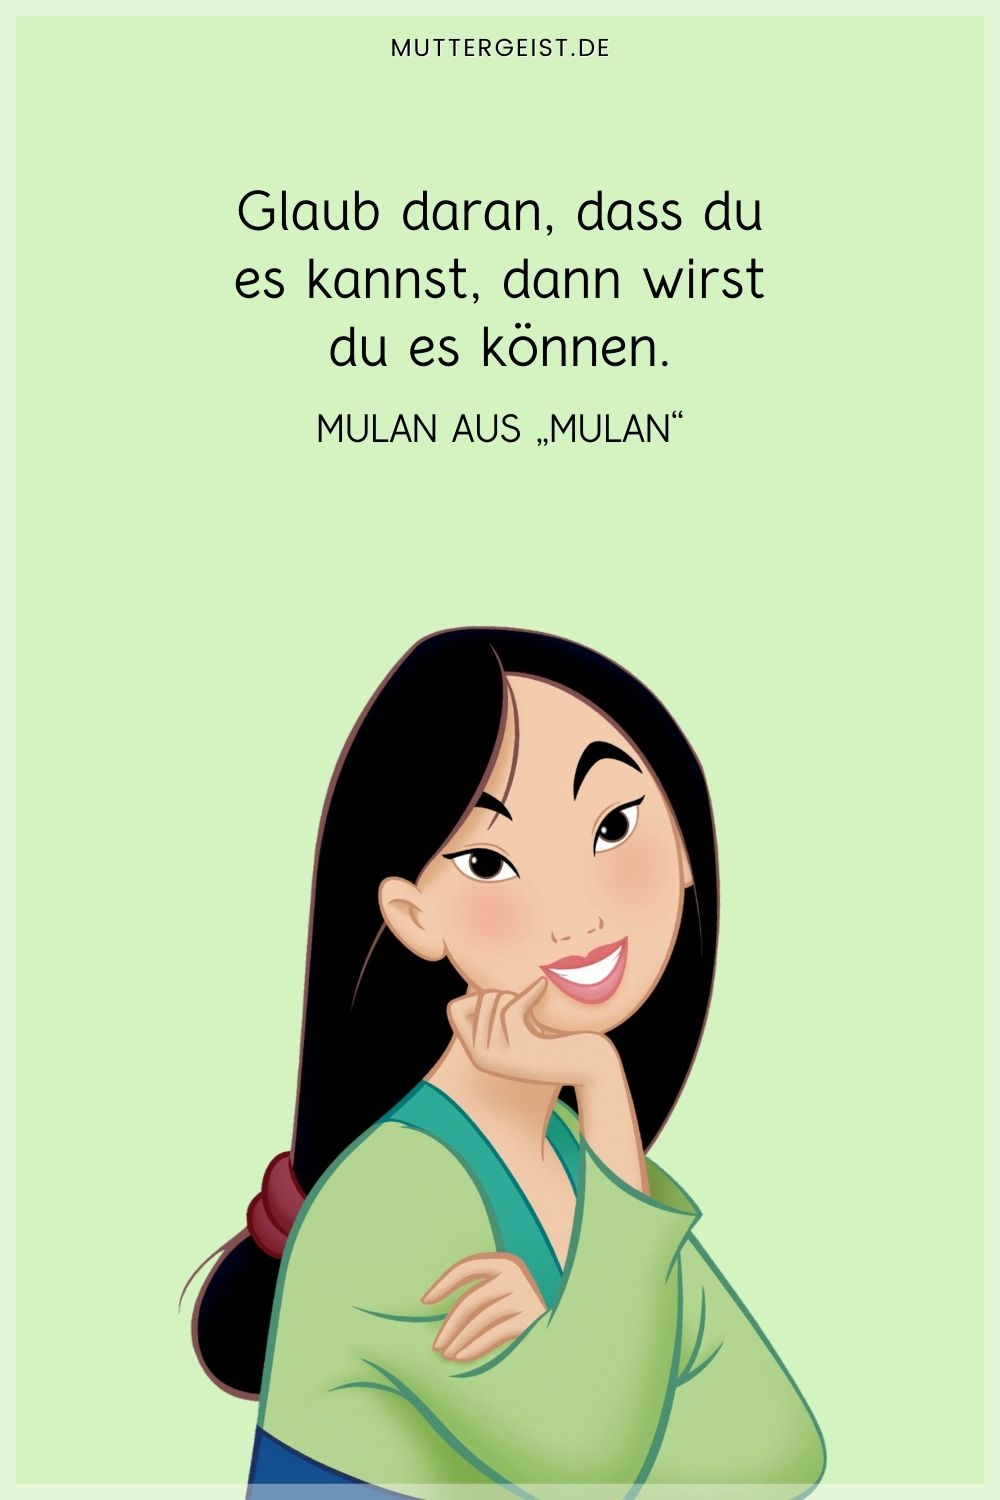 Zitat aus dem Disneyfilm Mulan